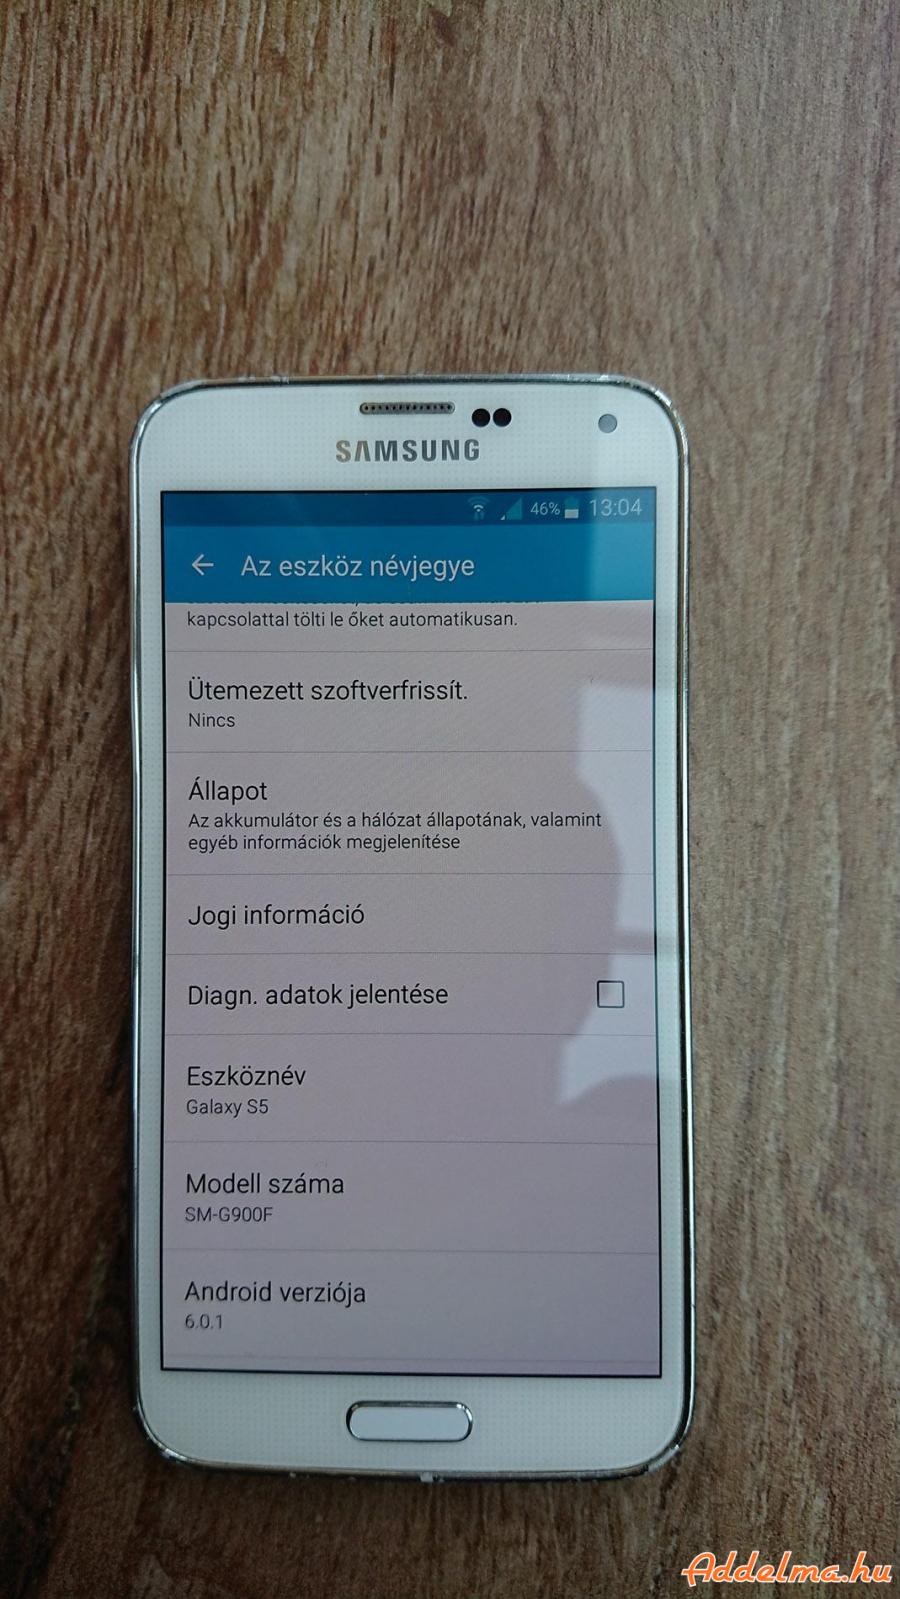 Eladó Samsung Galaxy S5 telenor